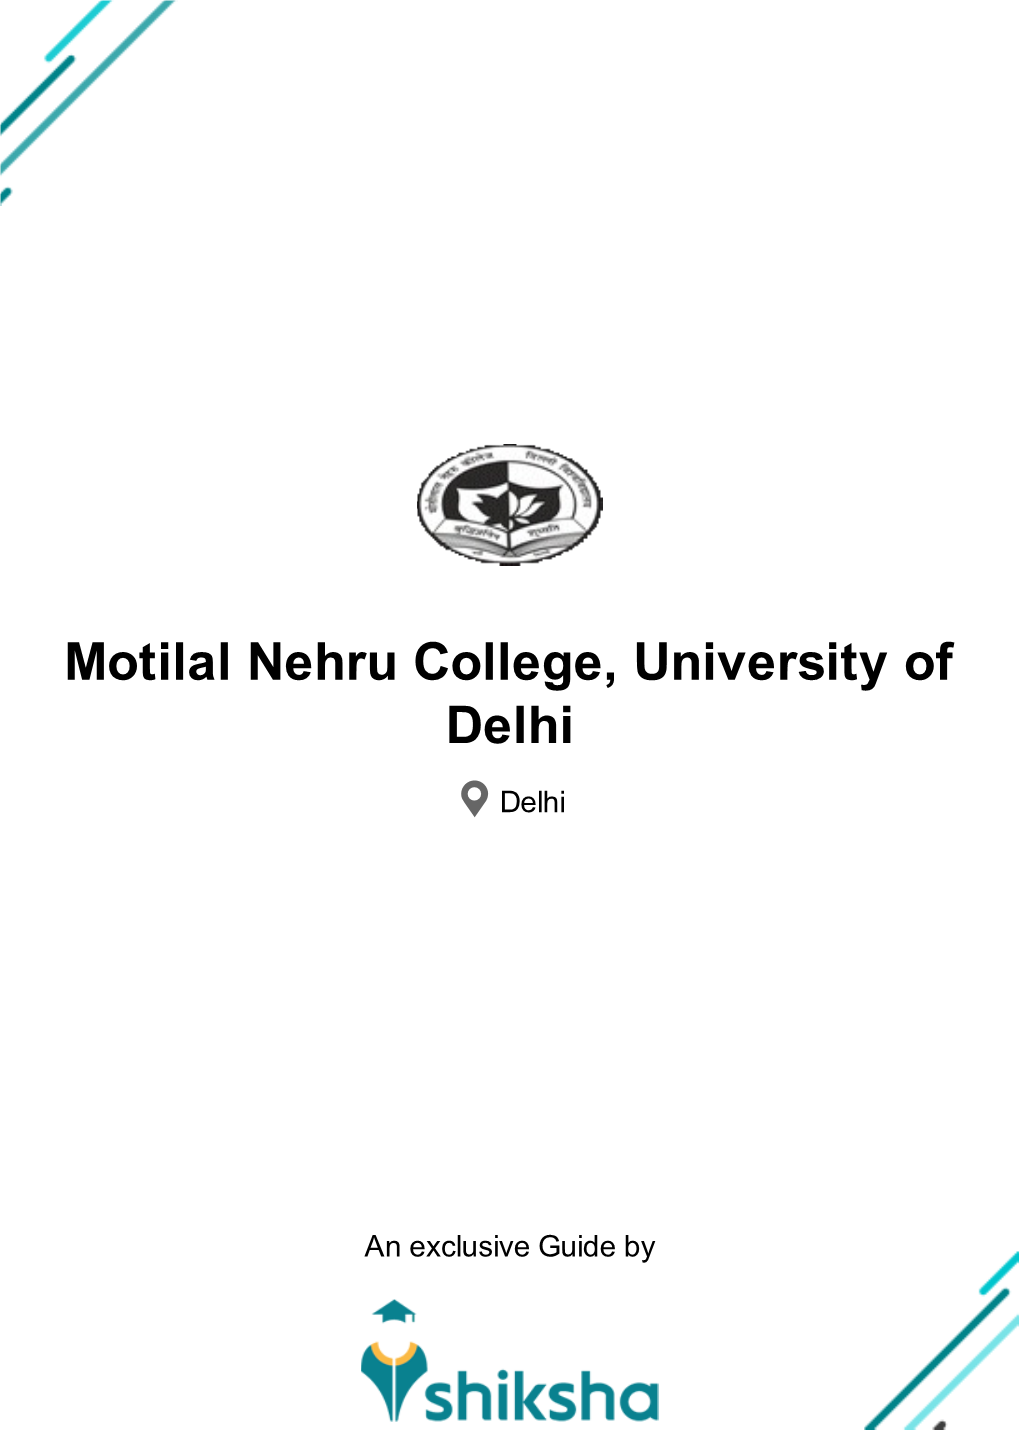 Motilal Nehru College, University of Delhi